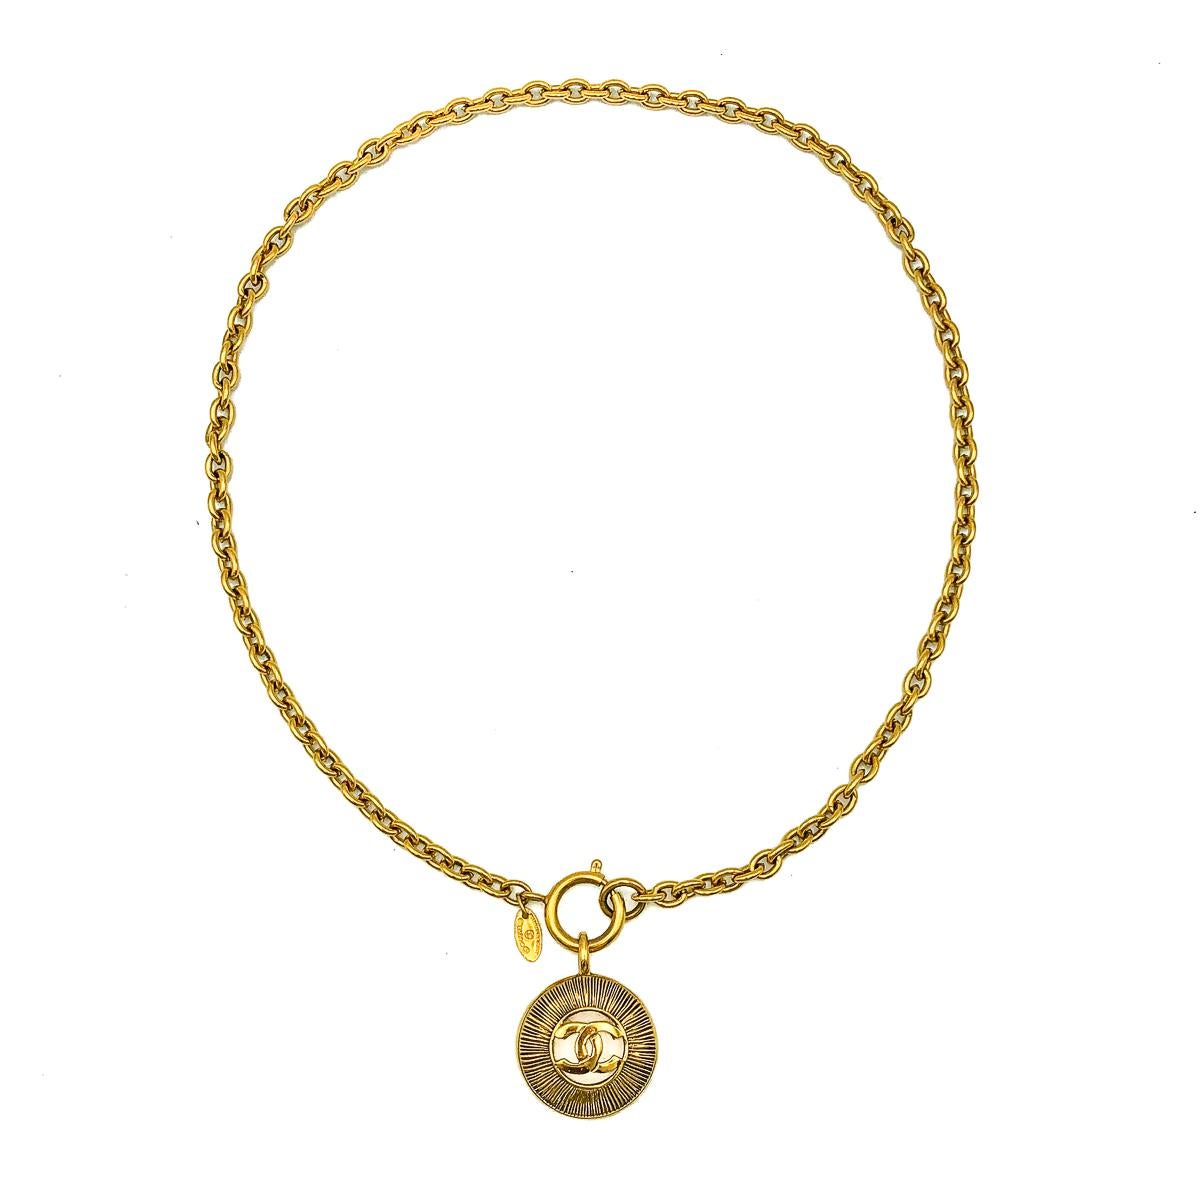 Vintage Chanel Sunburst Interlocking CC Medallion Necklace 1980s In Good Condition For Sale In Wilmslow, GB